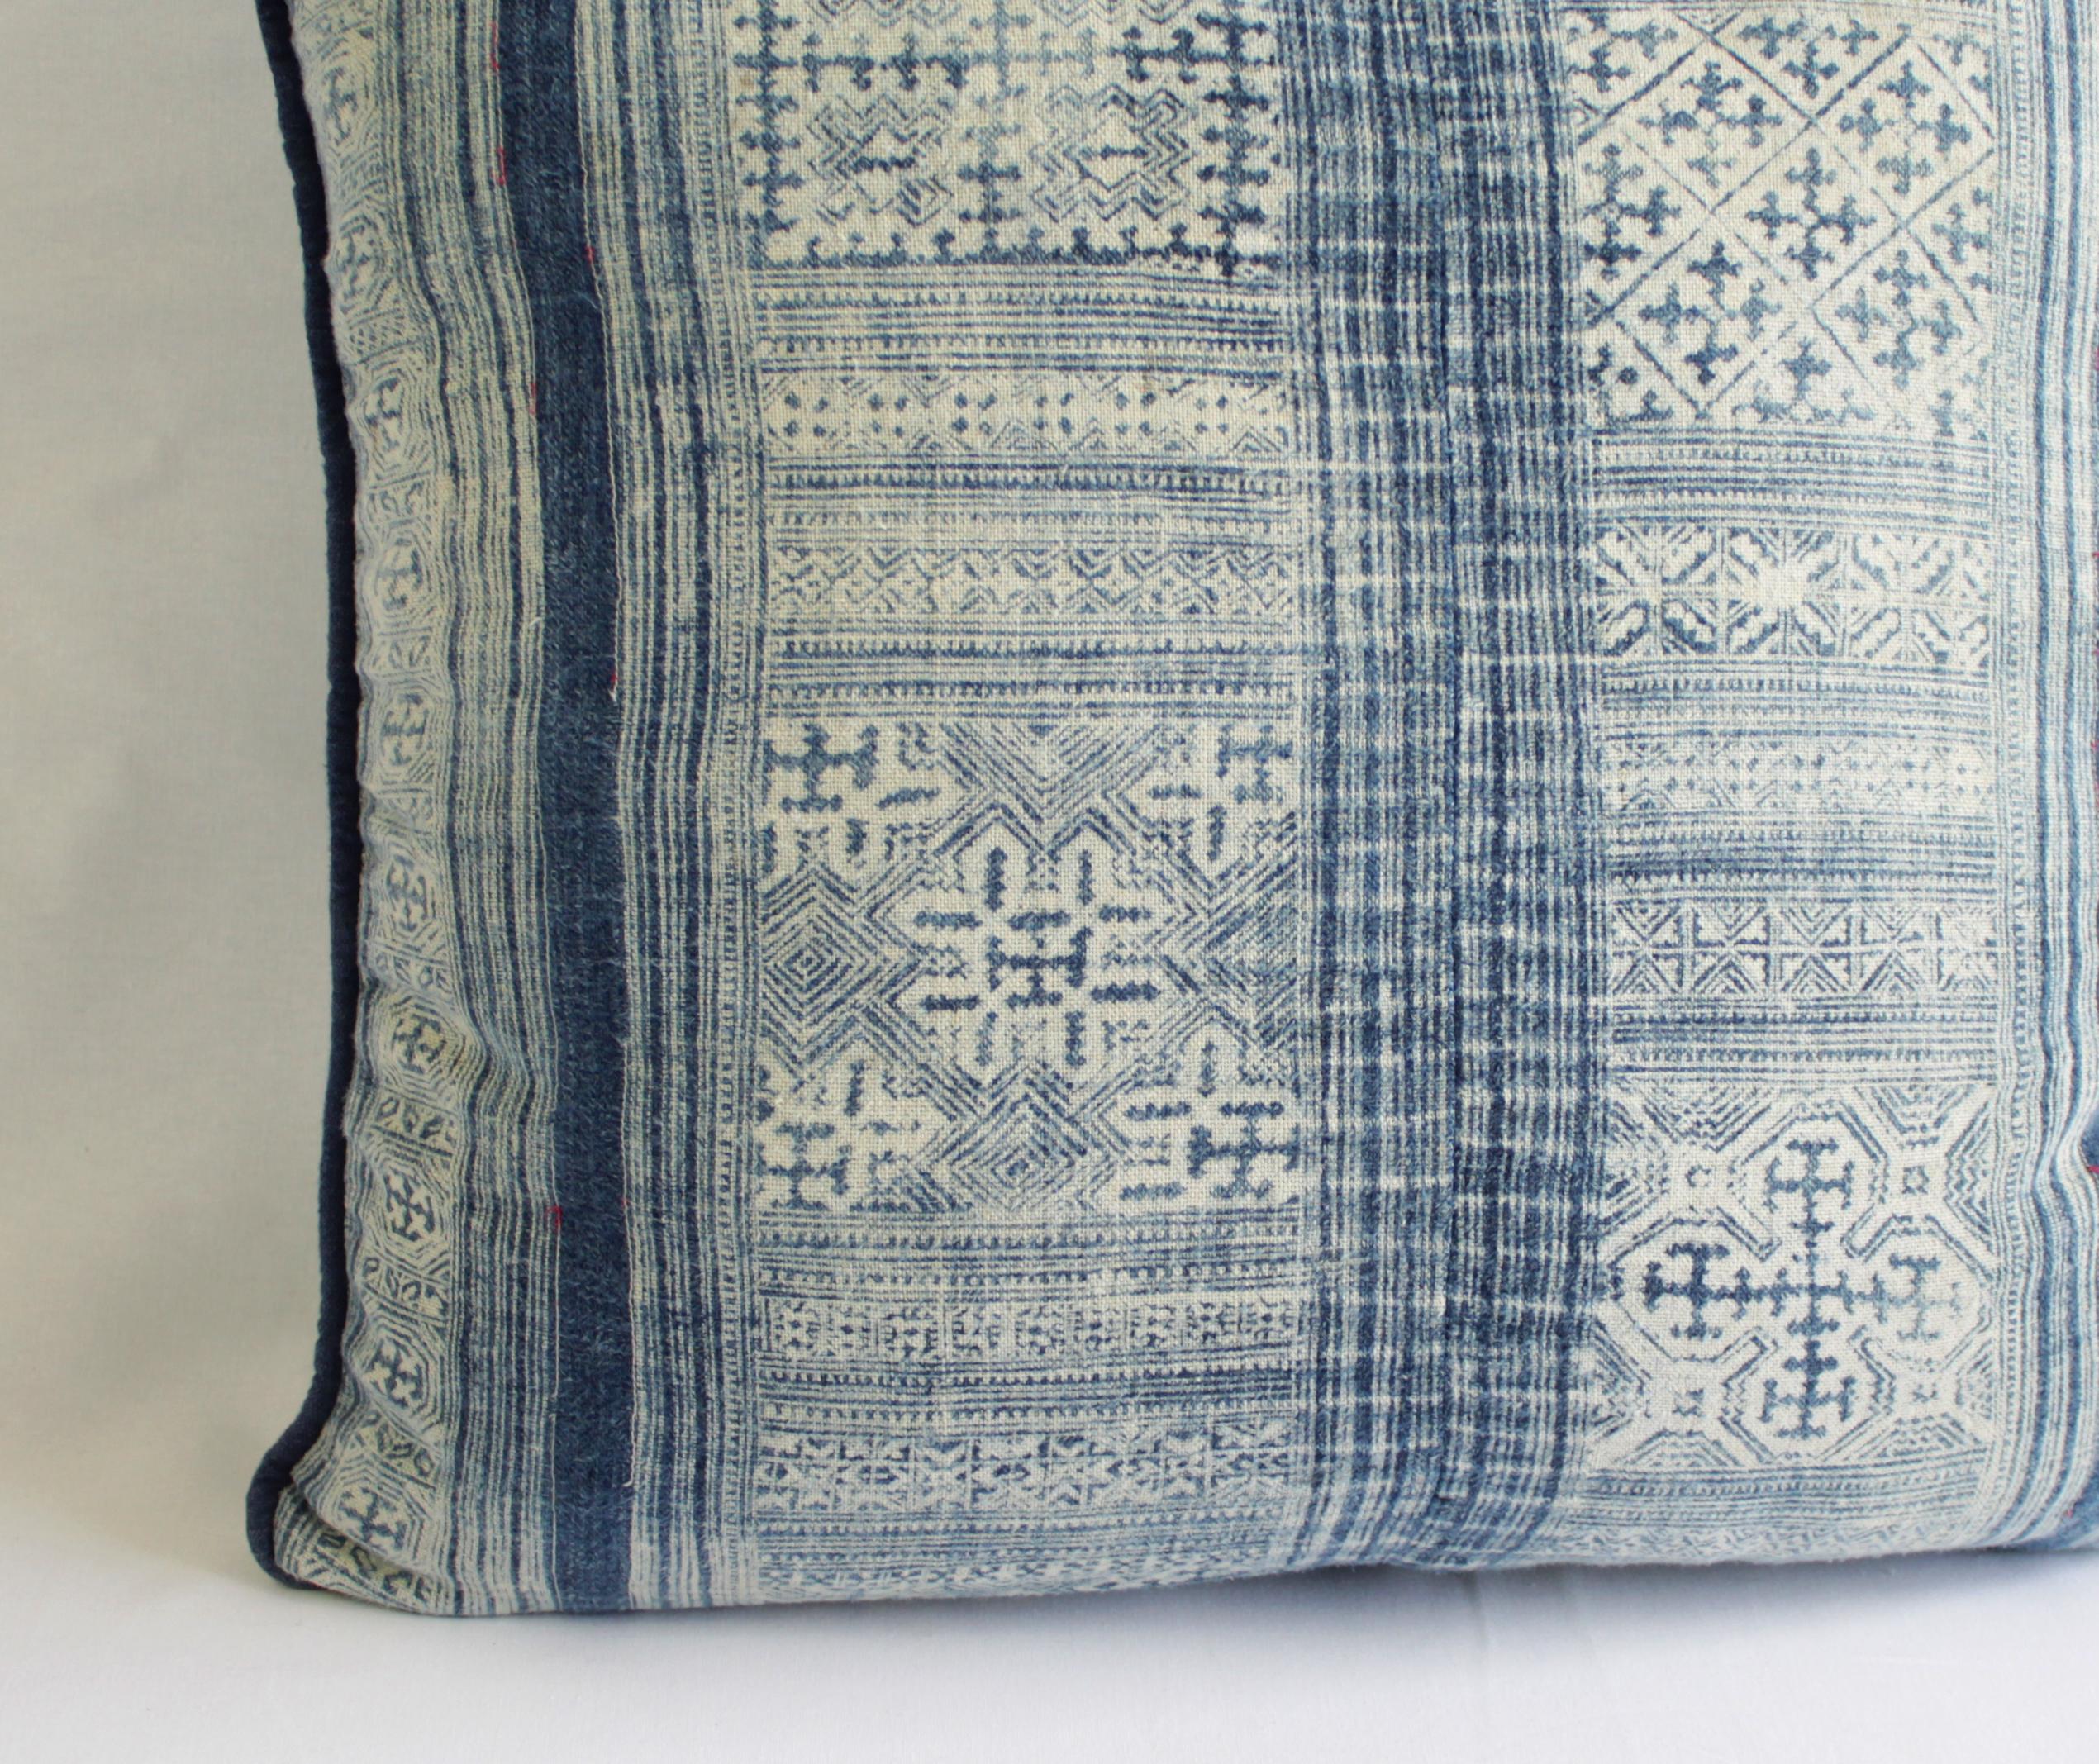 19th Century Vintage Indigo Blue and White Batik Pattern Pillow